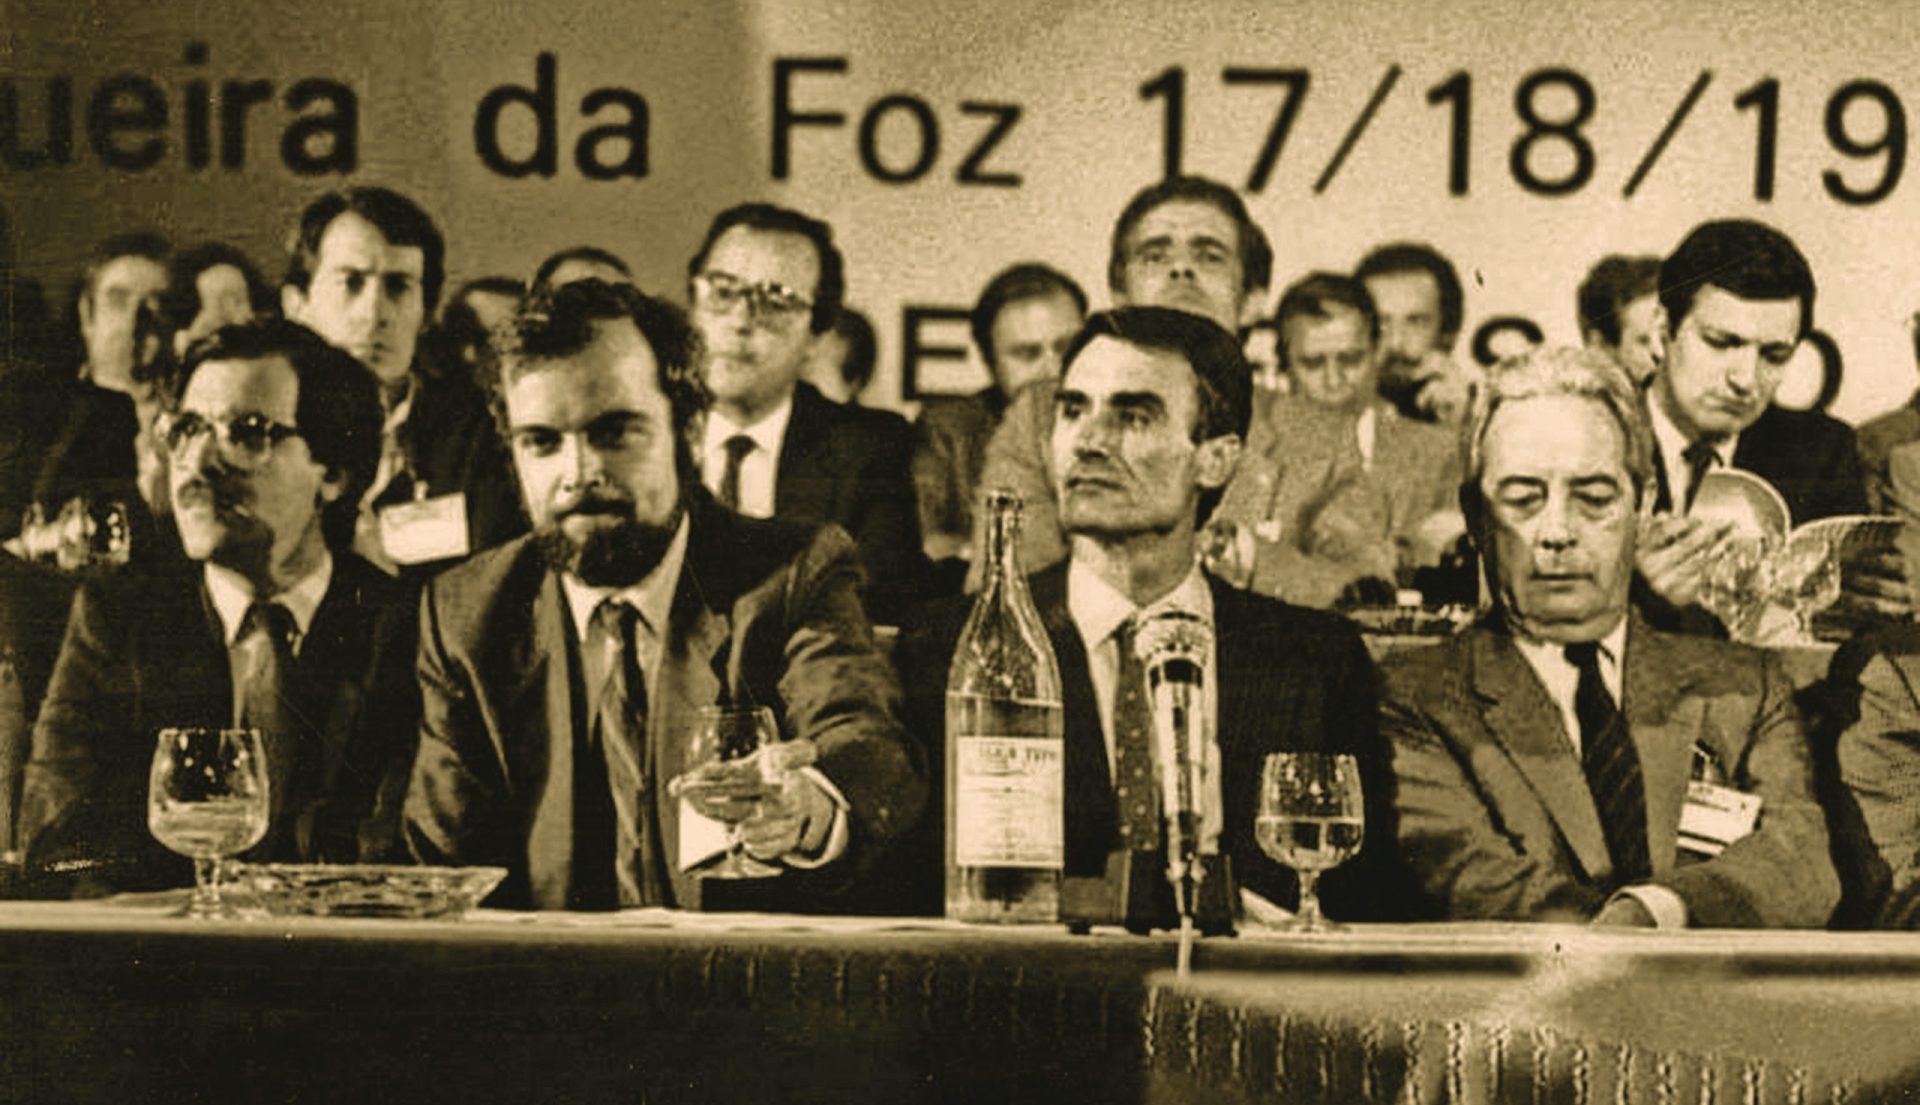 Os líderes do PSD segundo Menezes